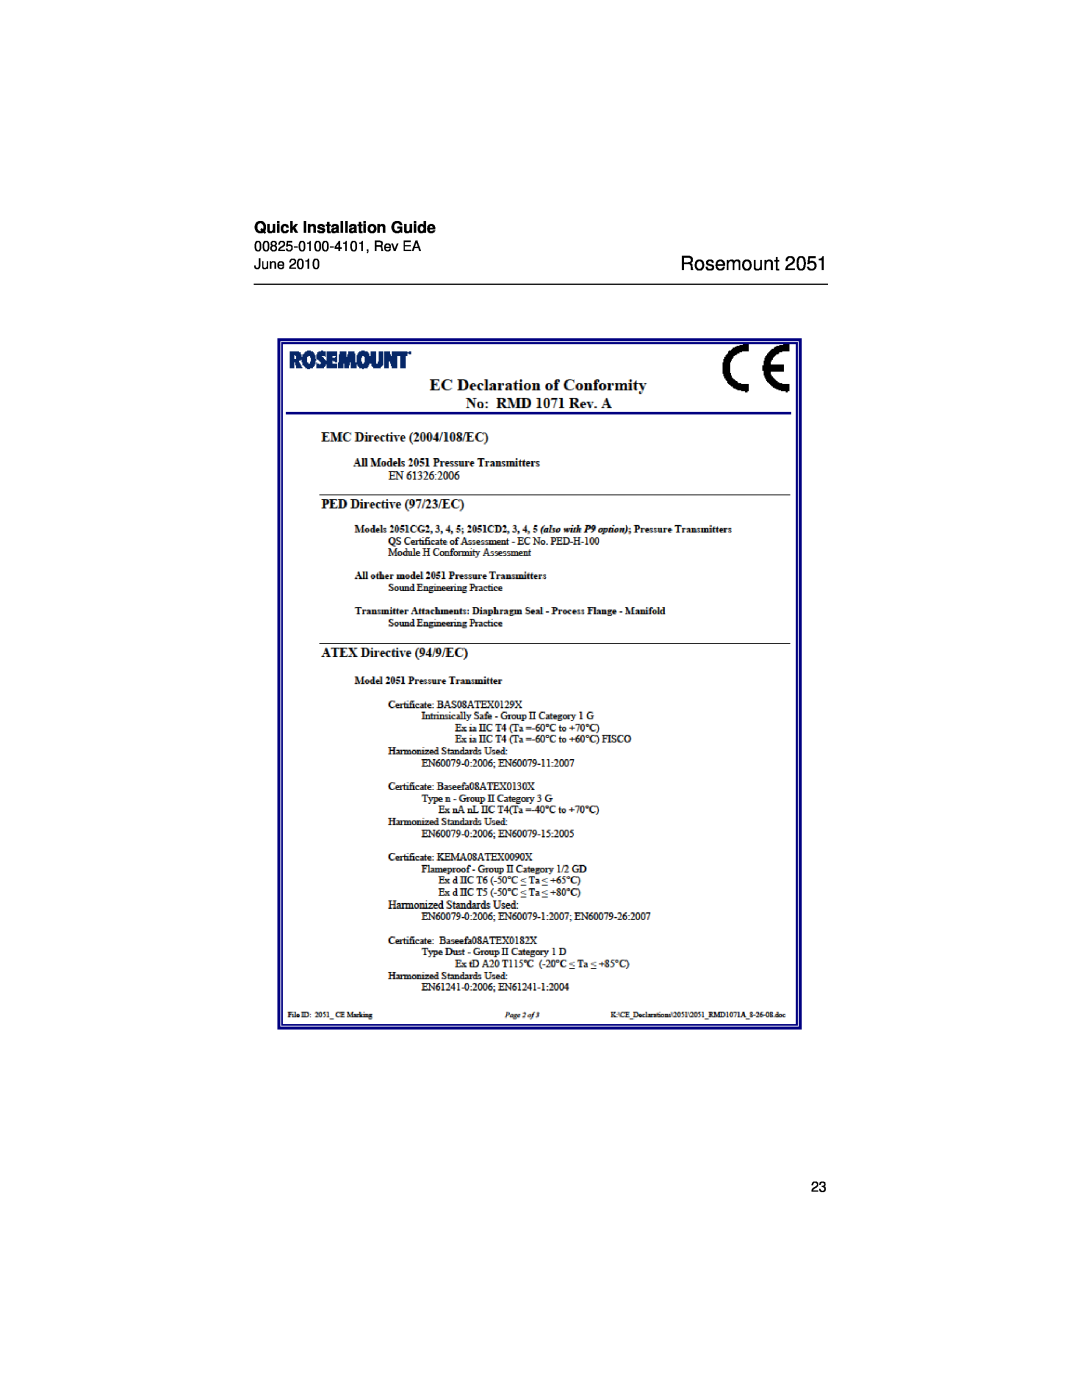 Emerson Process Management 2051CF manual Rosemount, Quick Installation Guide, 00825-0100-4101,Rev EA June 